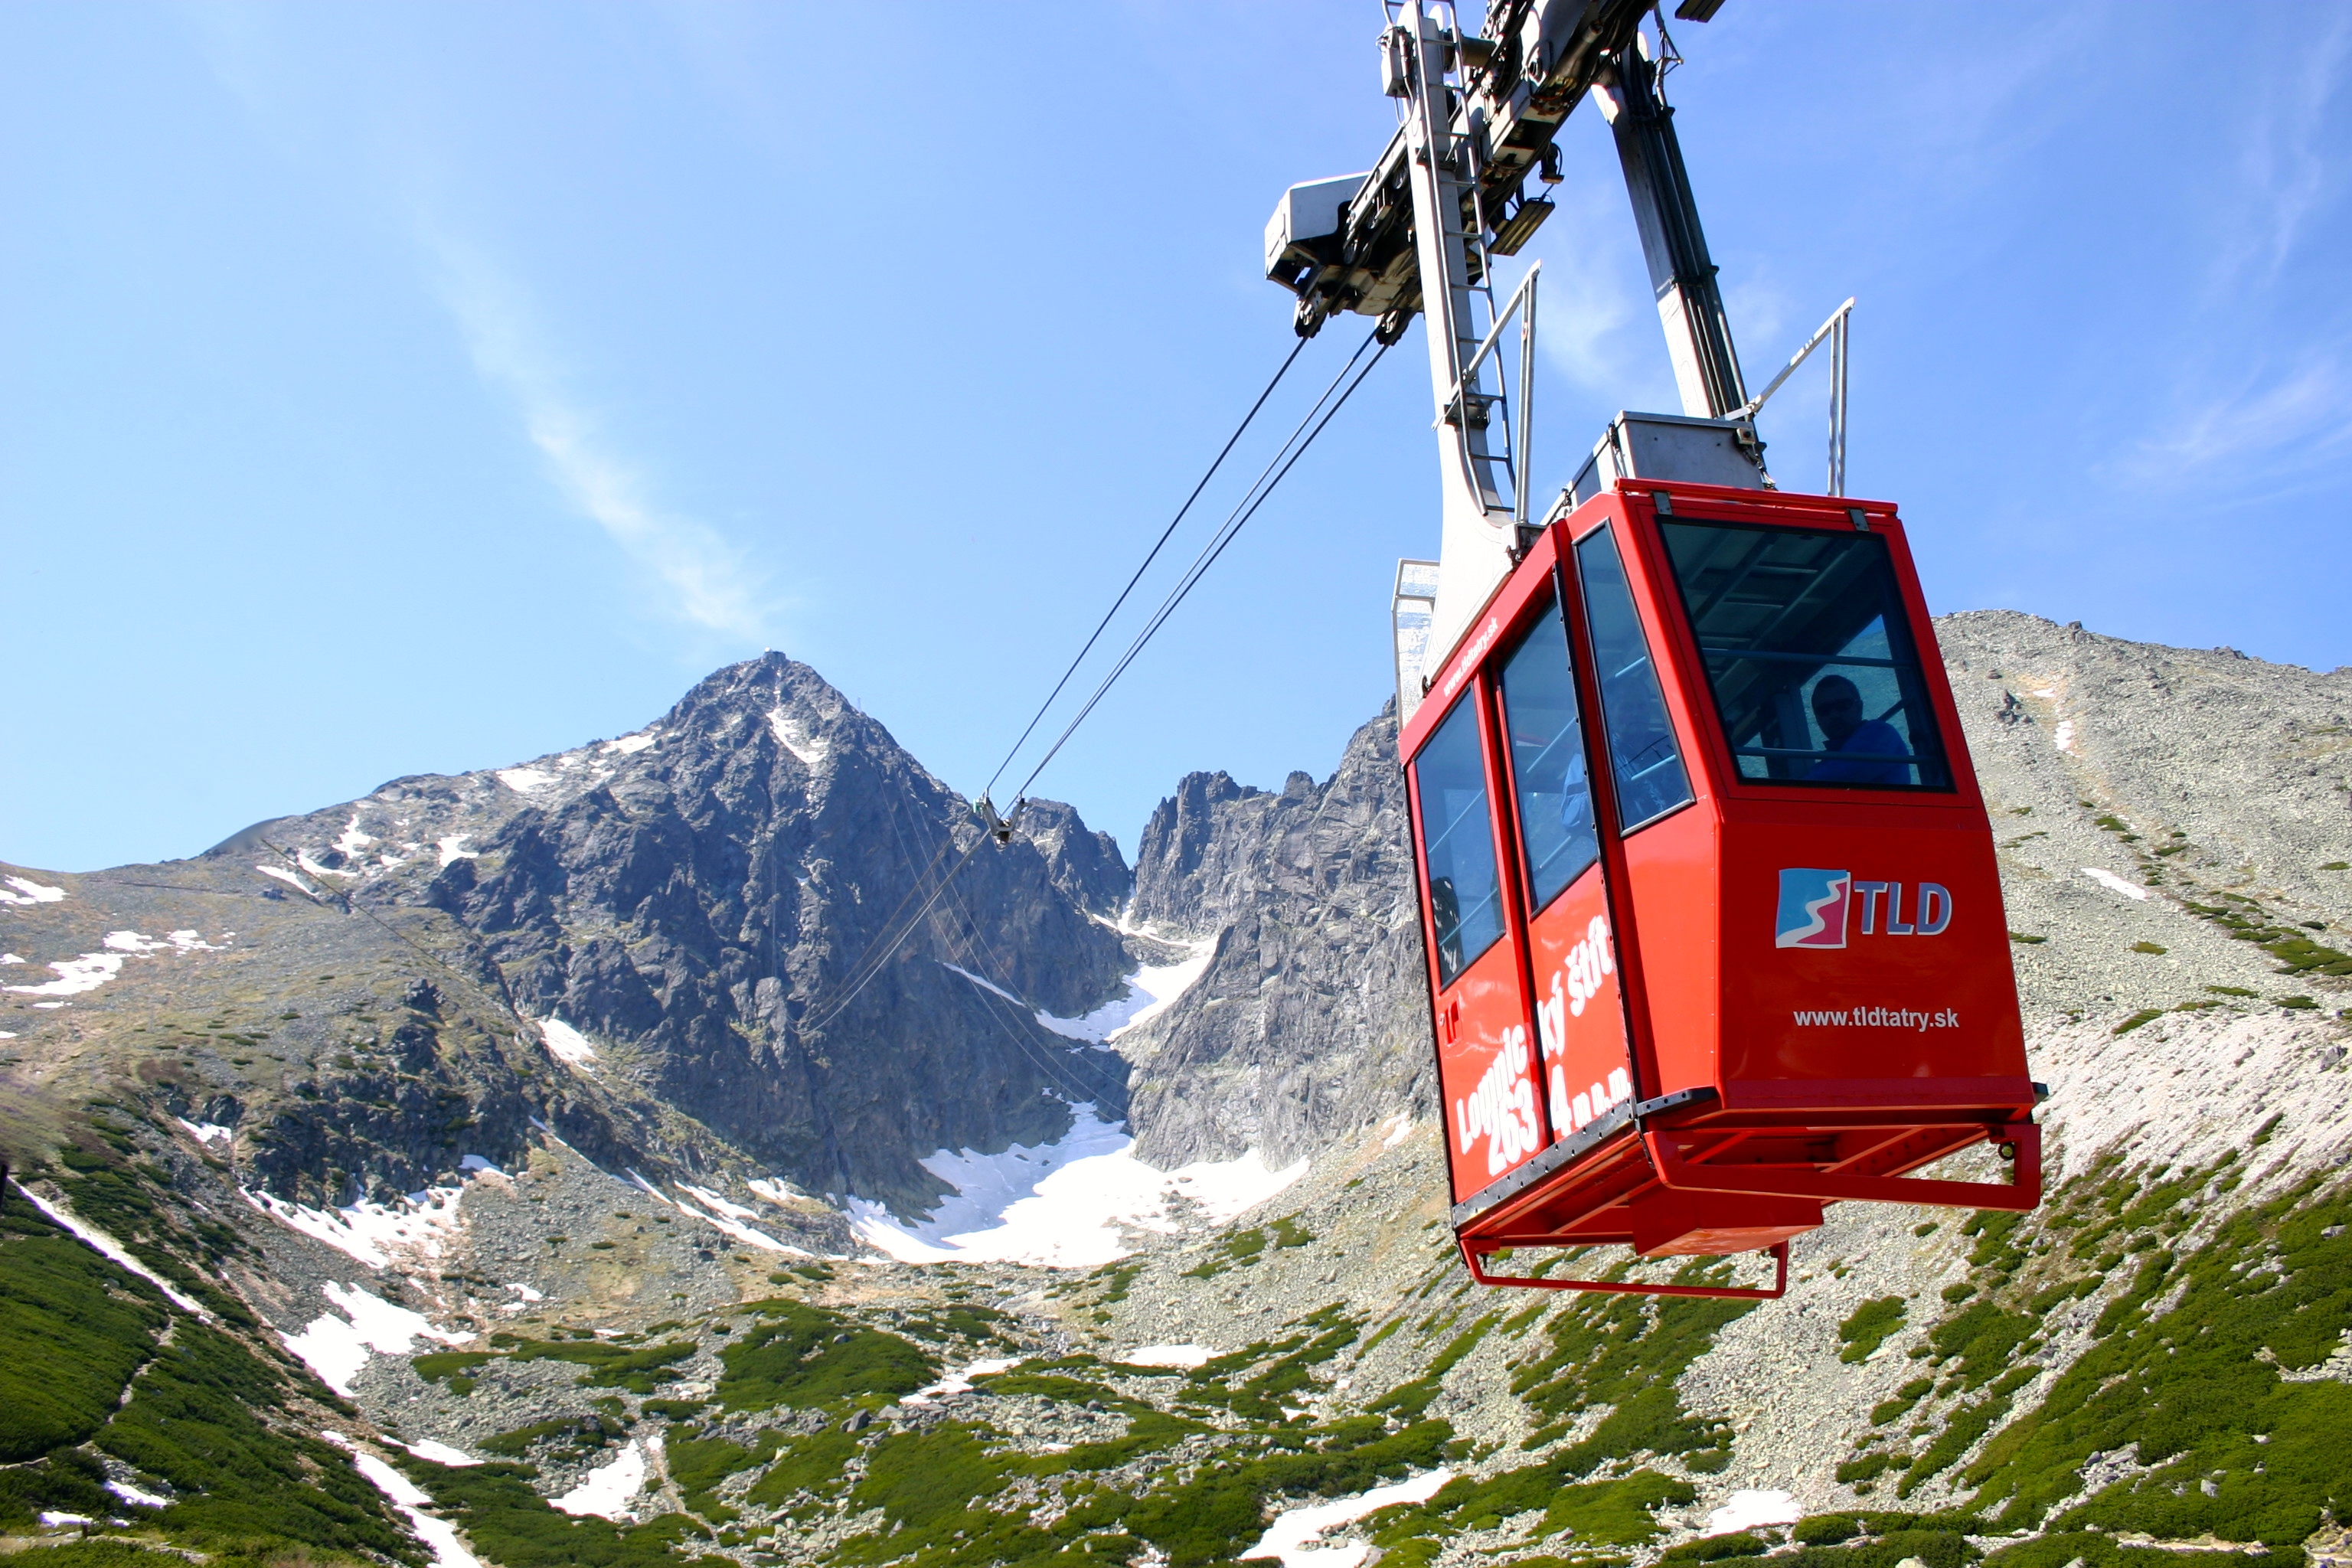 Kabínková lanovka na Lomnický štít - jedna z najväčších turistických atrakcií Vysokých Tatier.